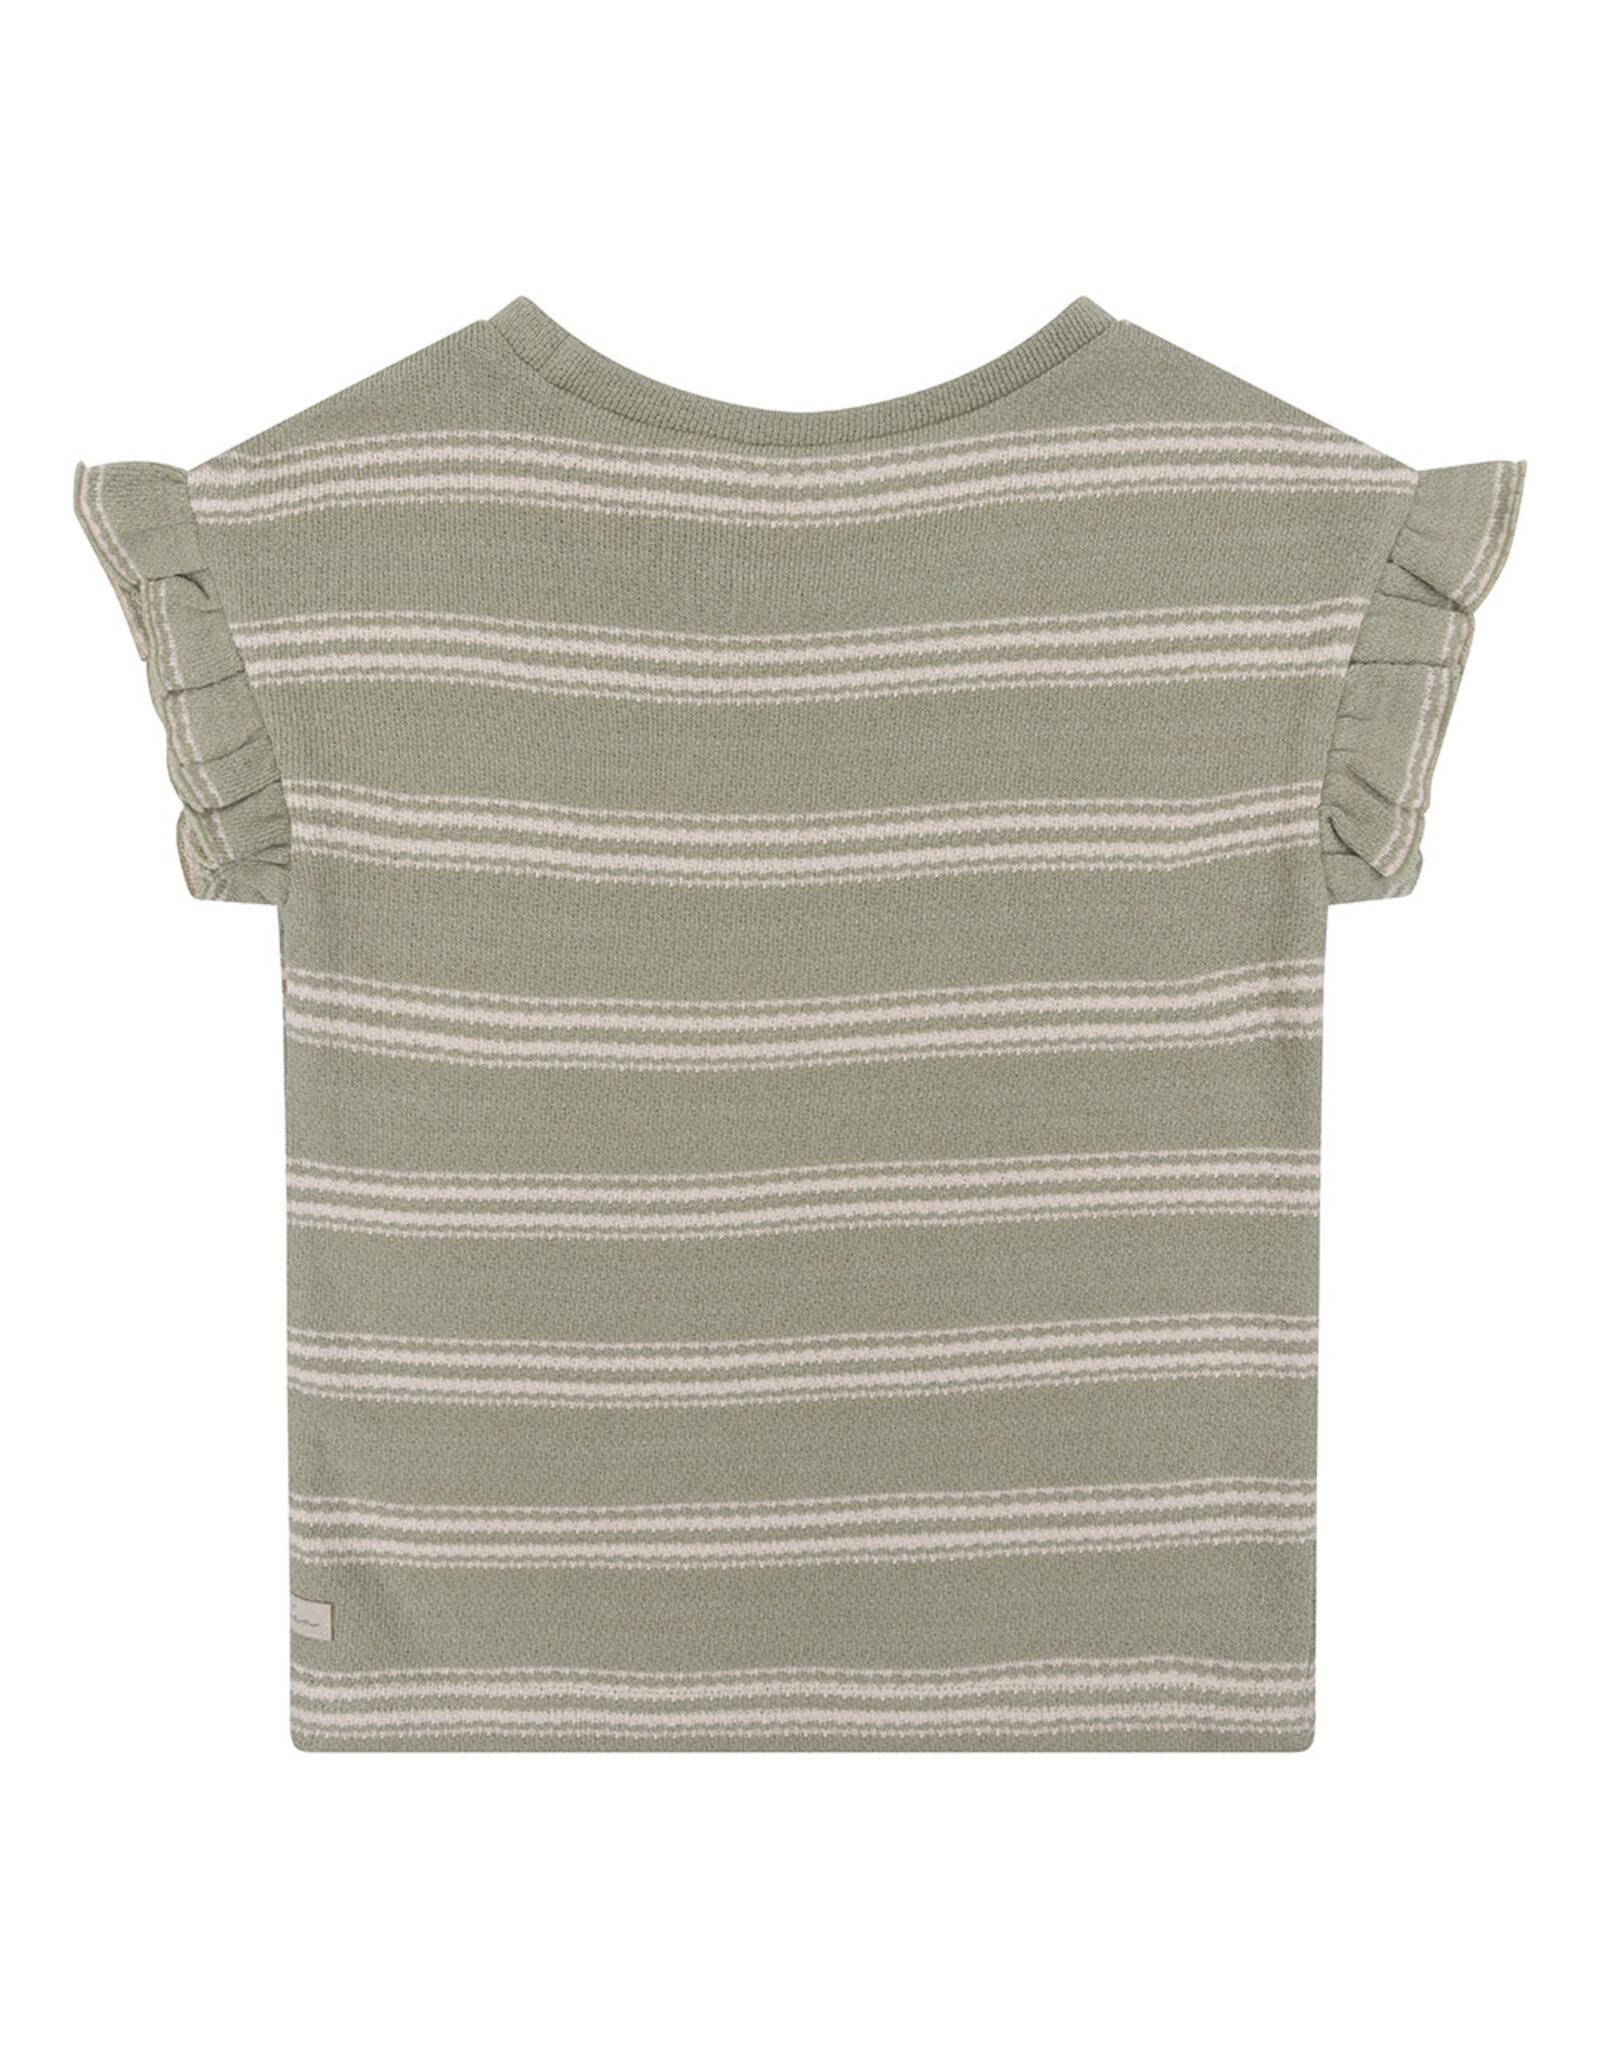 Daily7 T-shirt Boxy Fit Stripe Stone Army